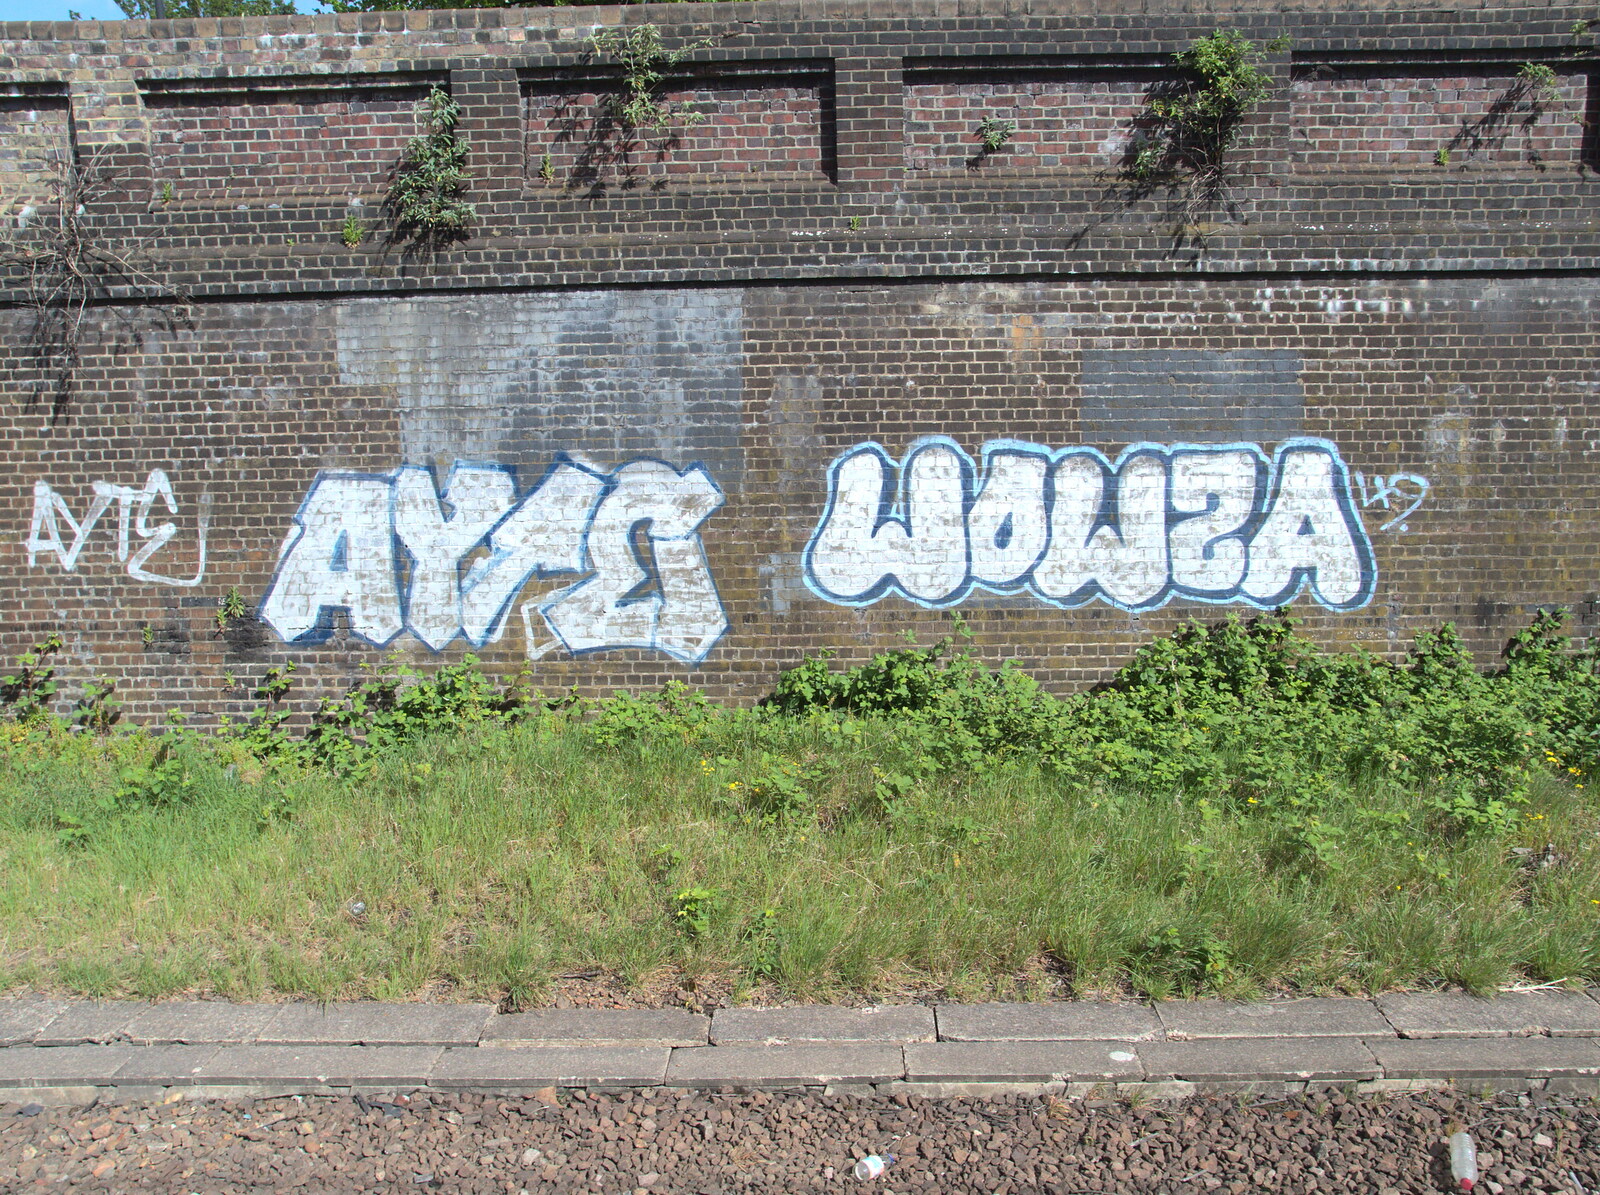 Wowza graffiti near Ilford from Diss Kebabs and Pizza Express, Ipswich, Suffolk - 7th May 2015